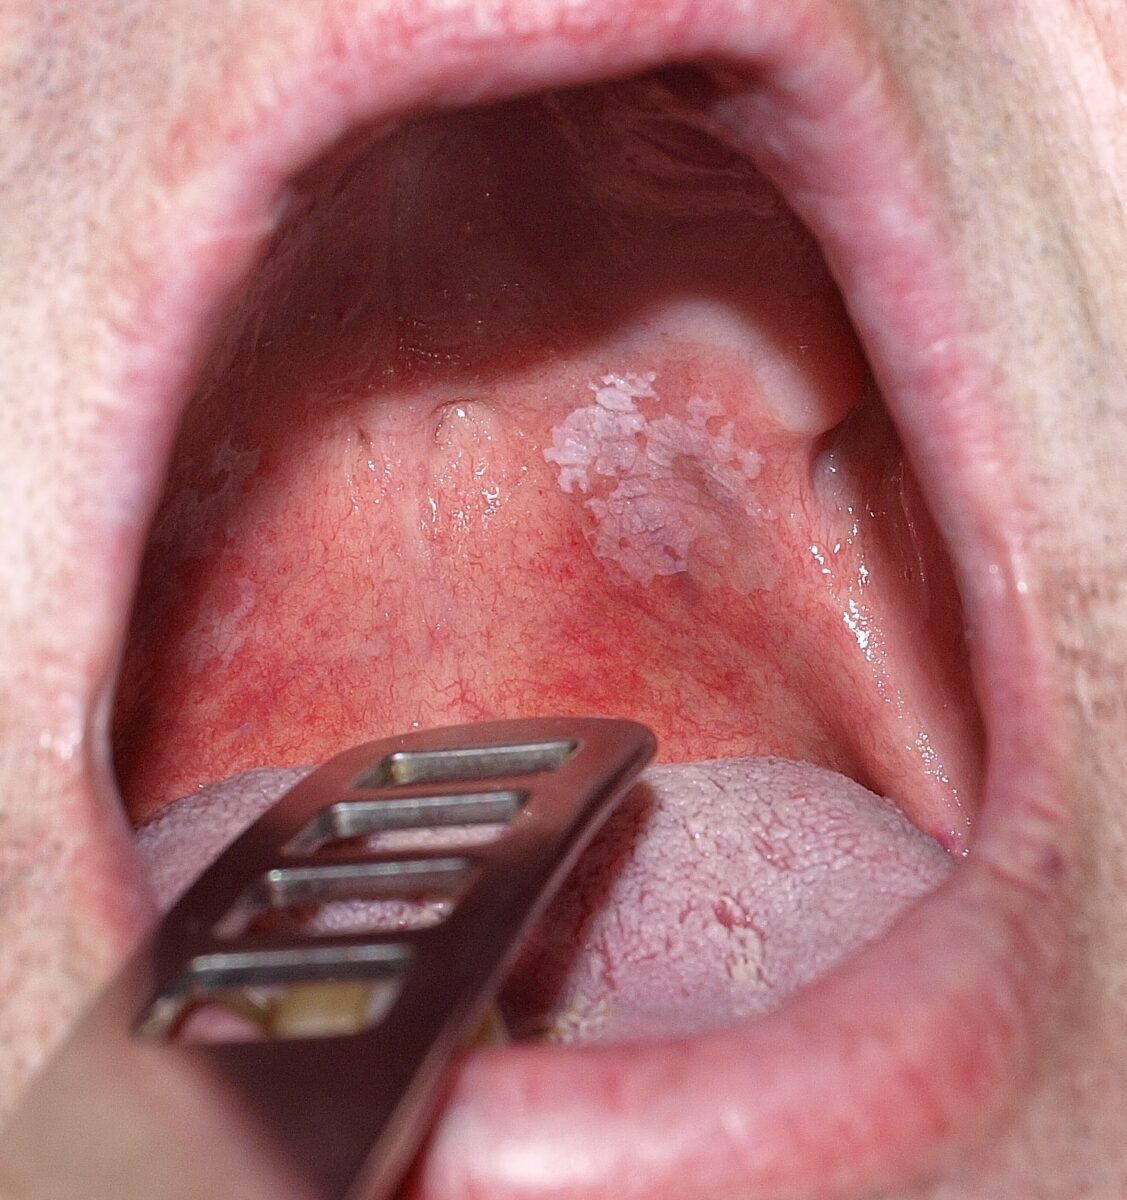 Homogenous oral leukoplakia